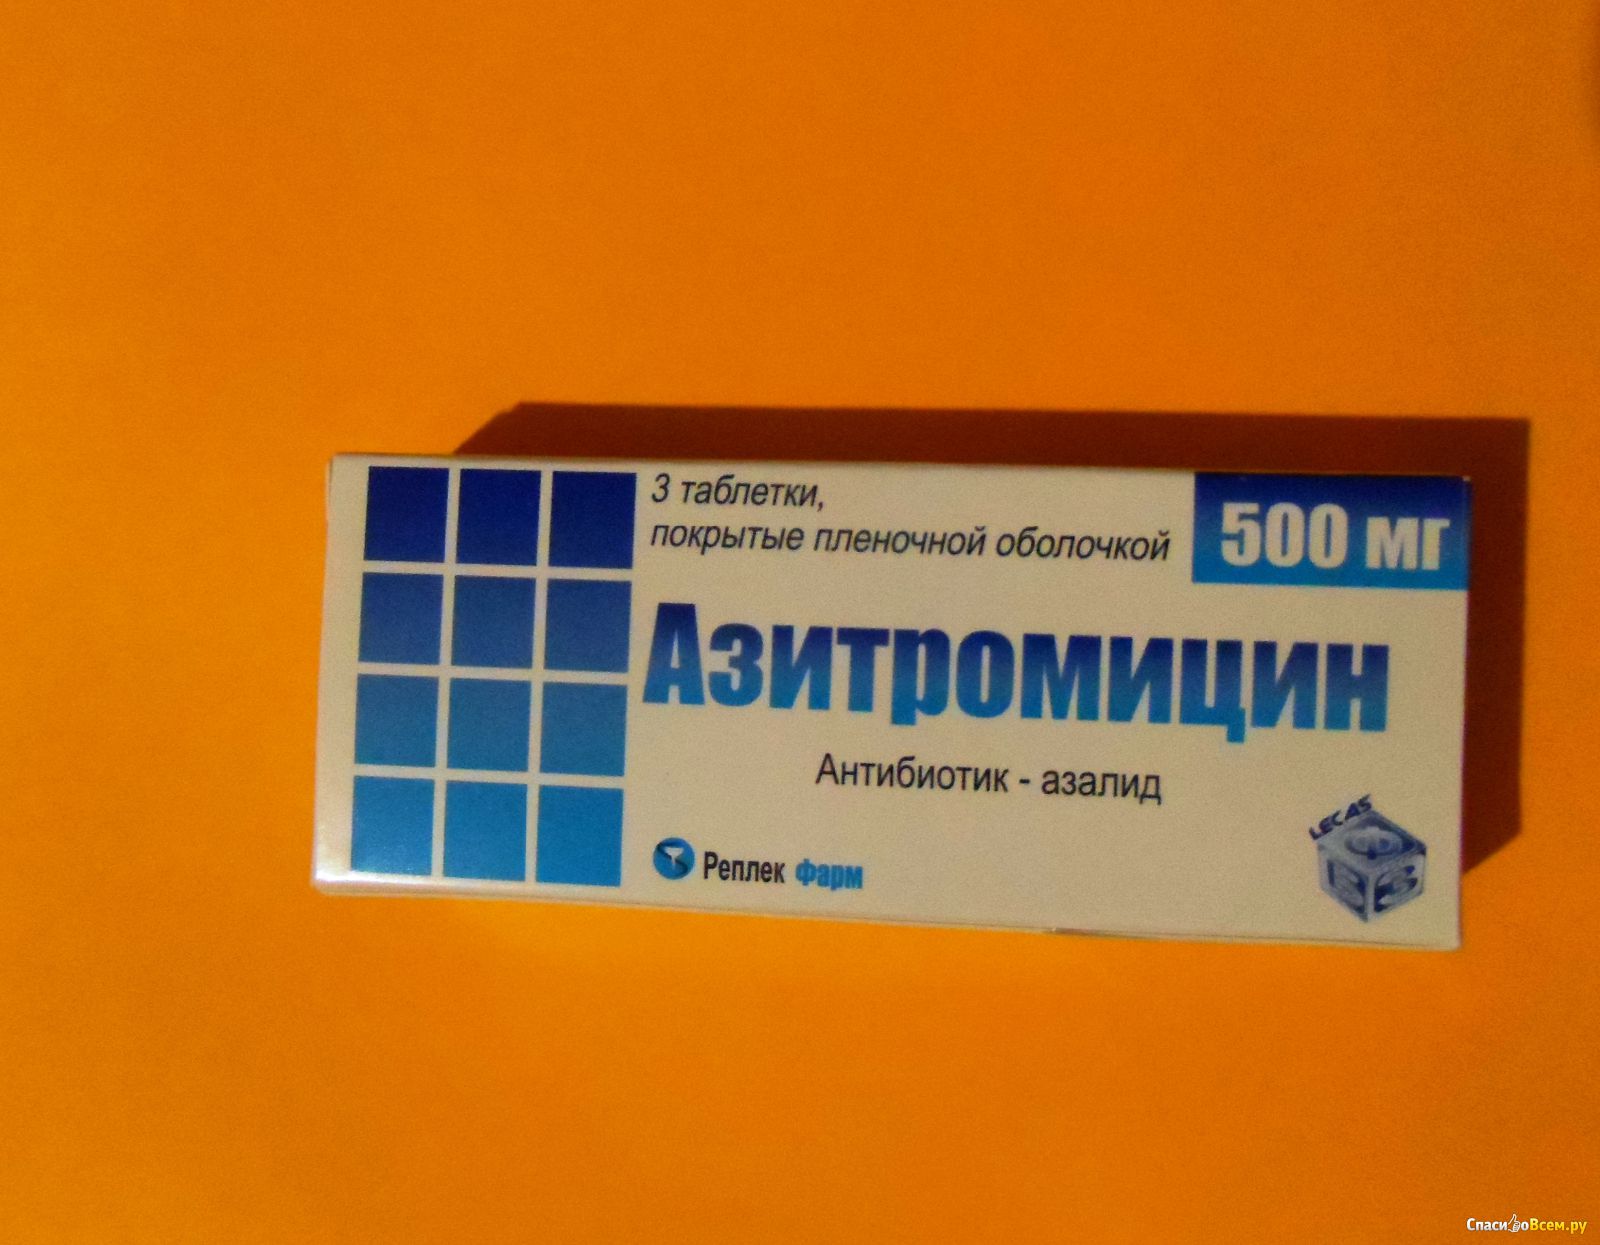 Три антибиотика. Антибиотик 3 таблетки название при простуде Азитромицин. Антибиотик на 3 дня Азитромицин. Антибиотик который пьется 3 дня. Антибиотики на три дня название.